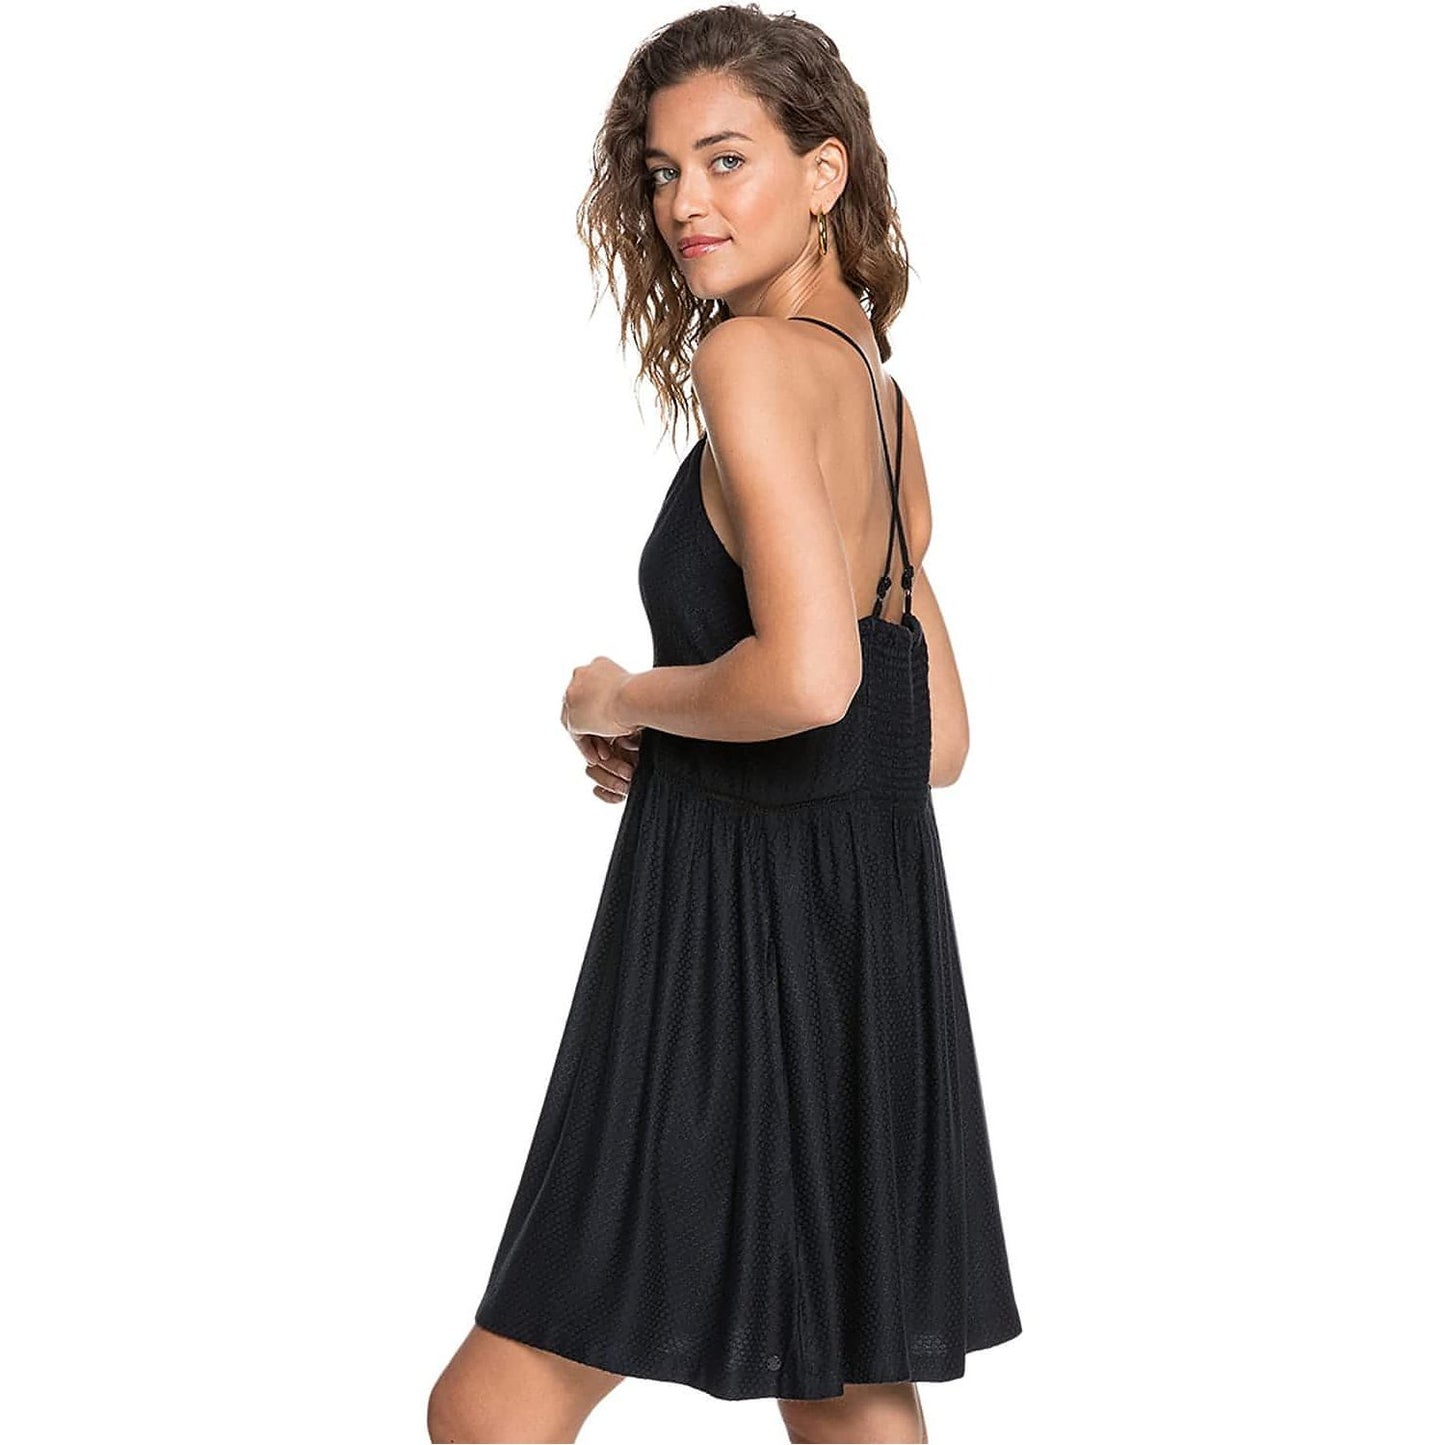 Roxy woman's New Silver Light Strappy Woven Dress Dress - Black - Brandat Outlet